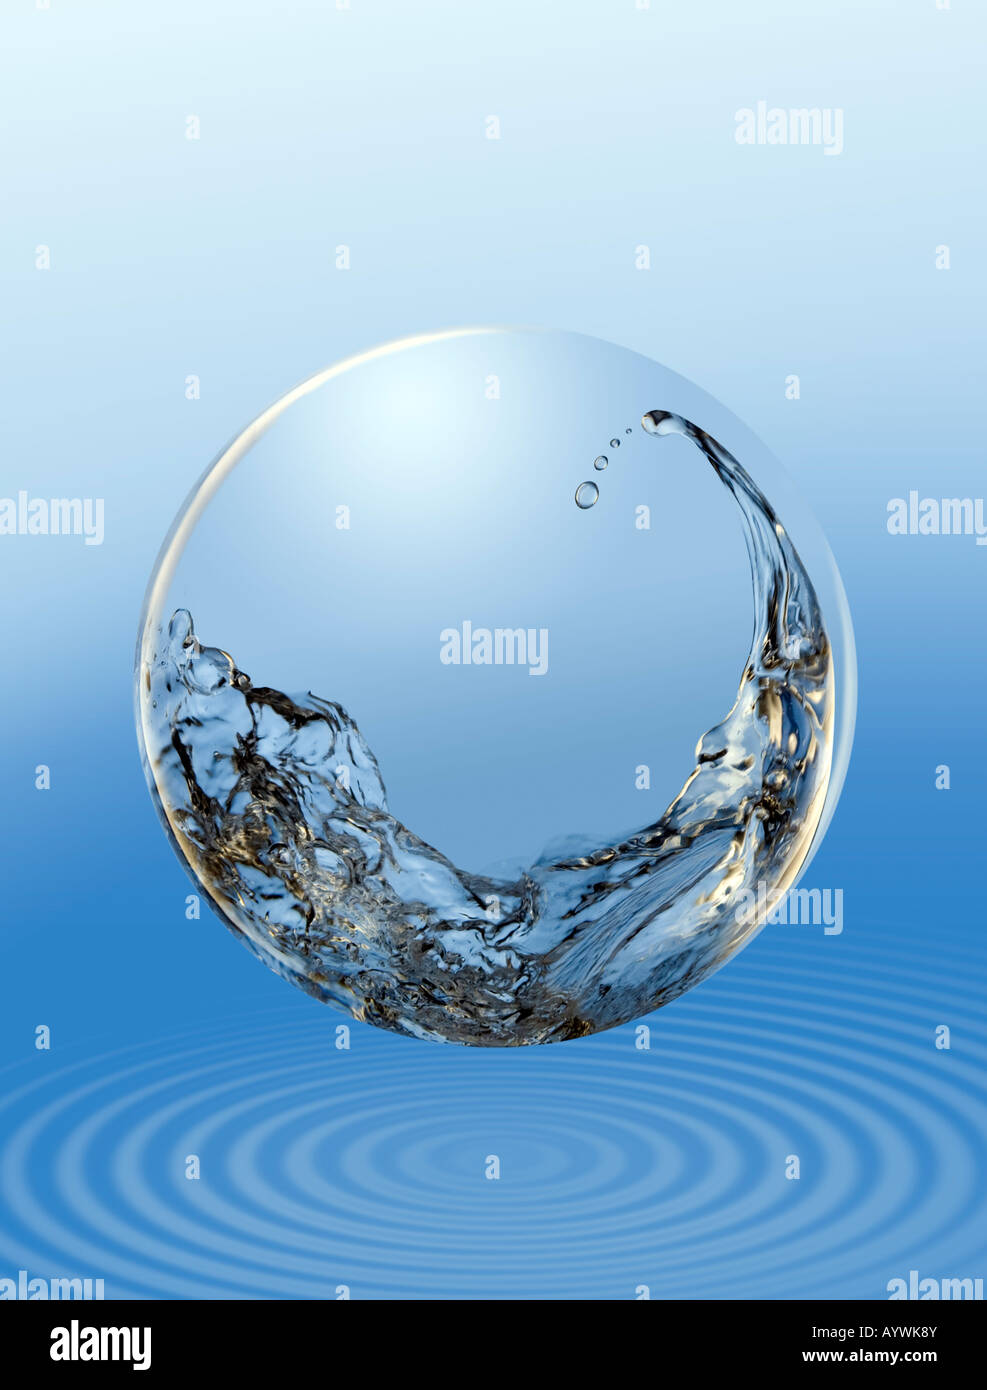 water sloshing about inside glass ball Stock Photo